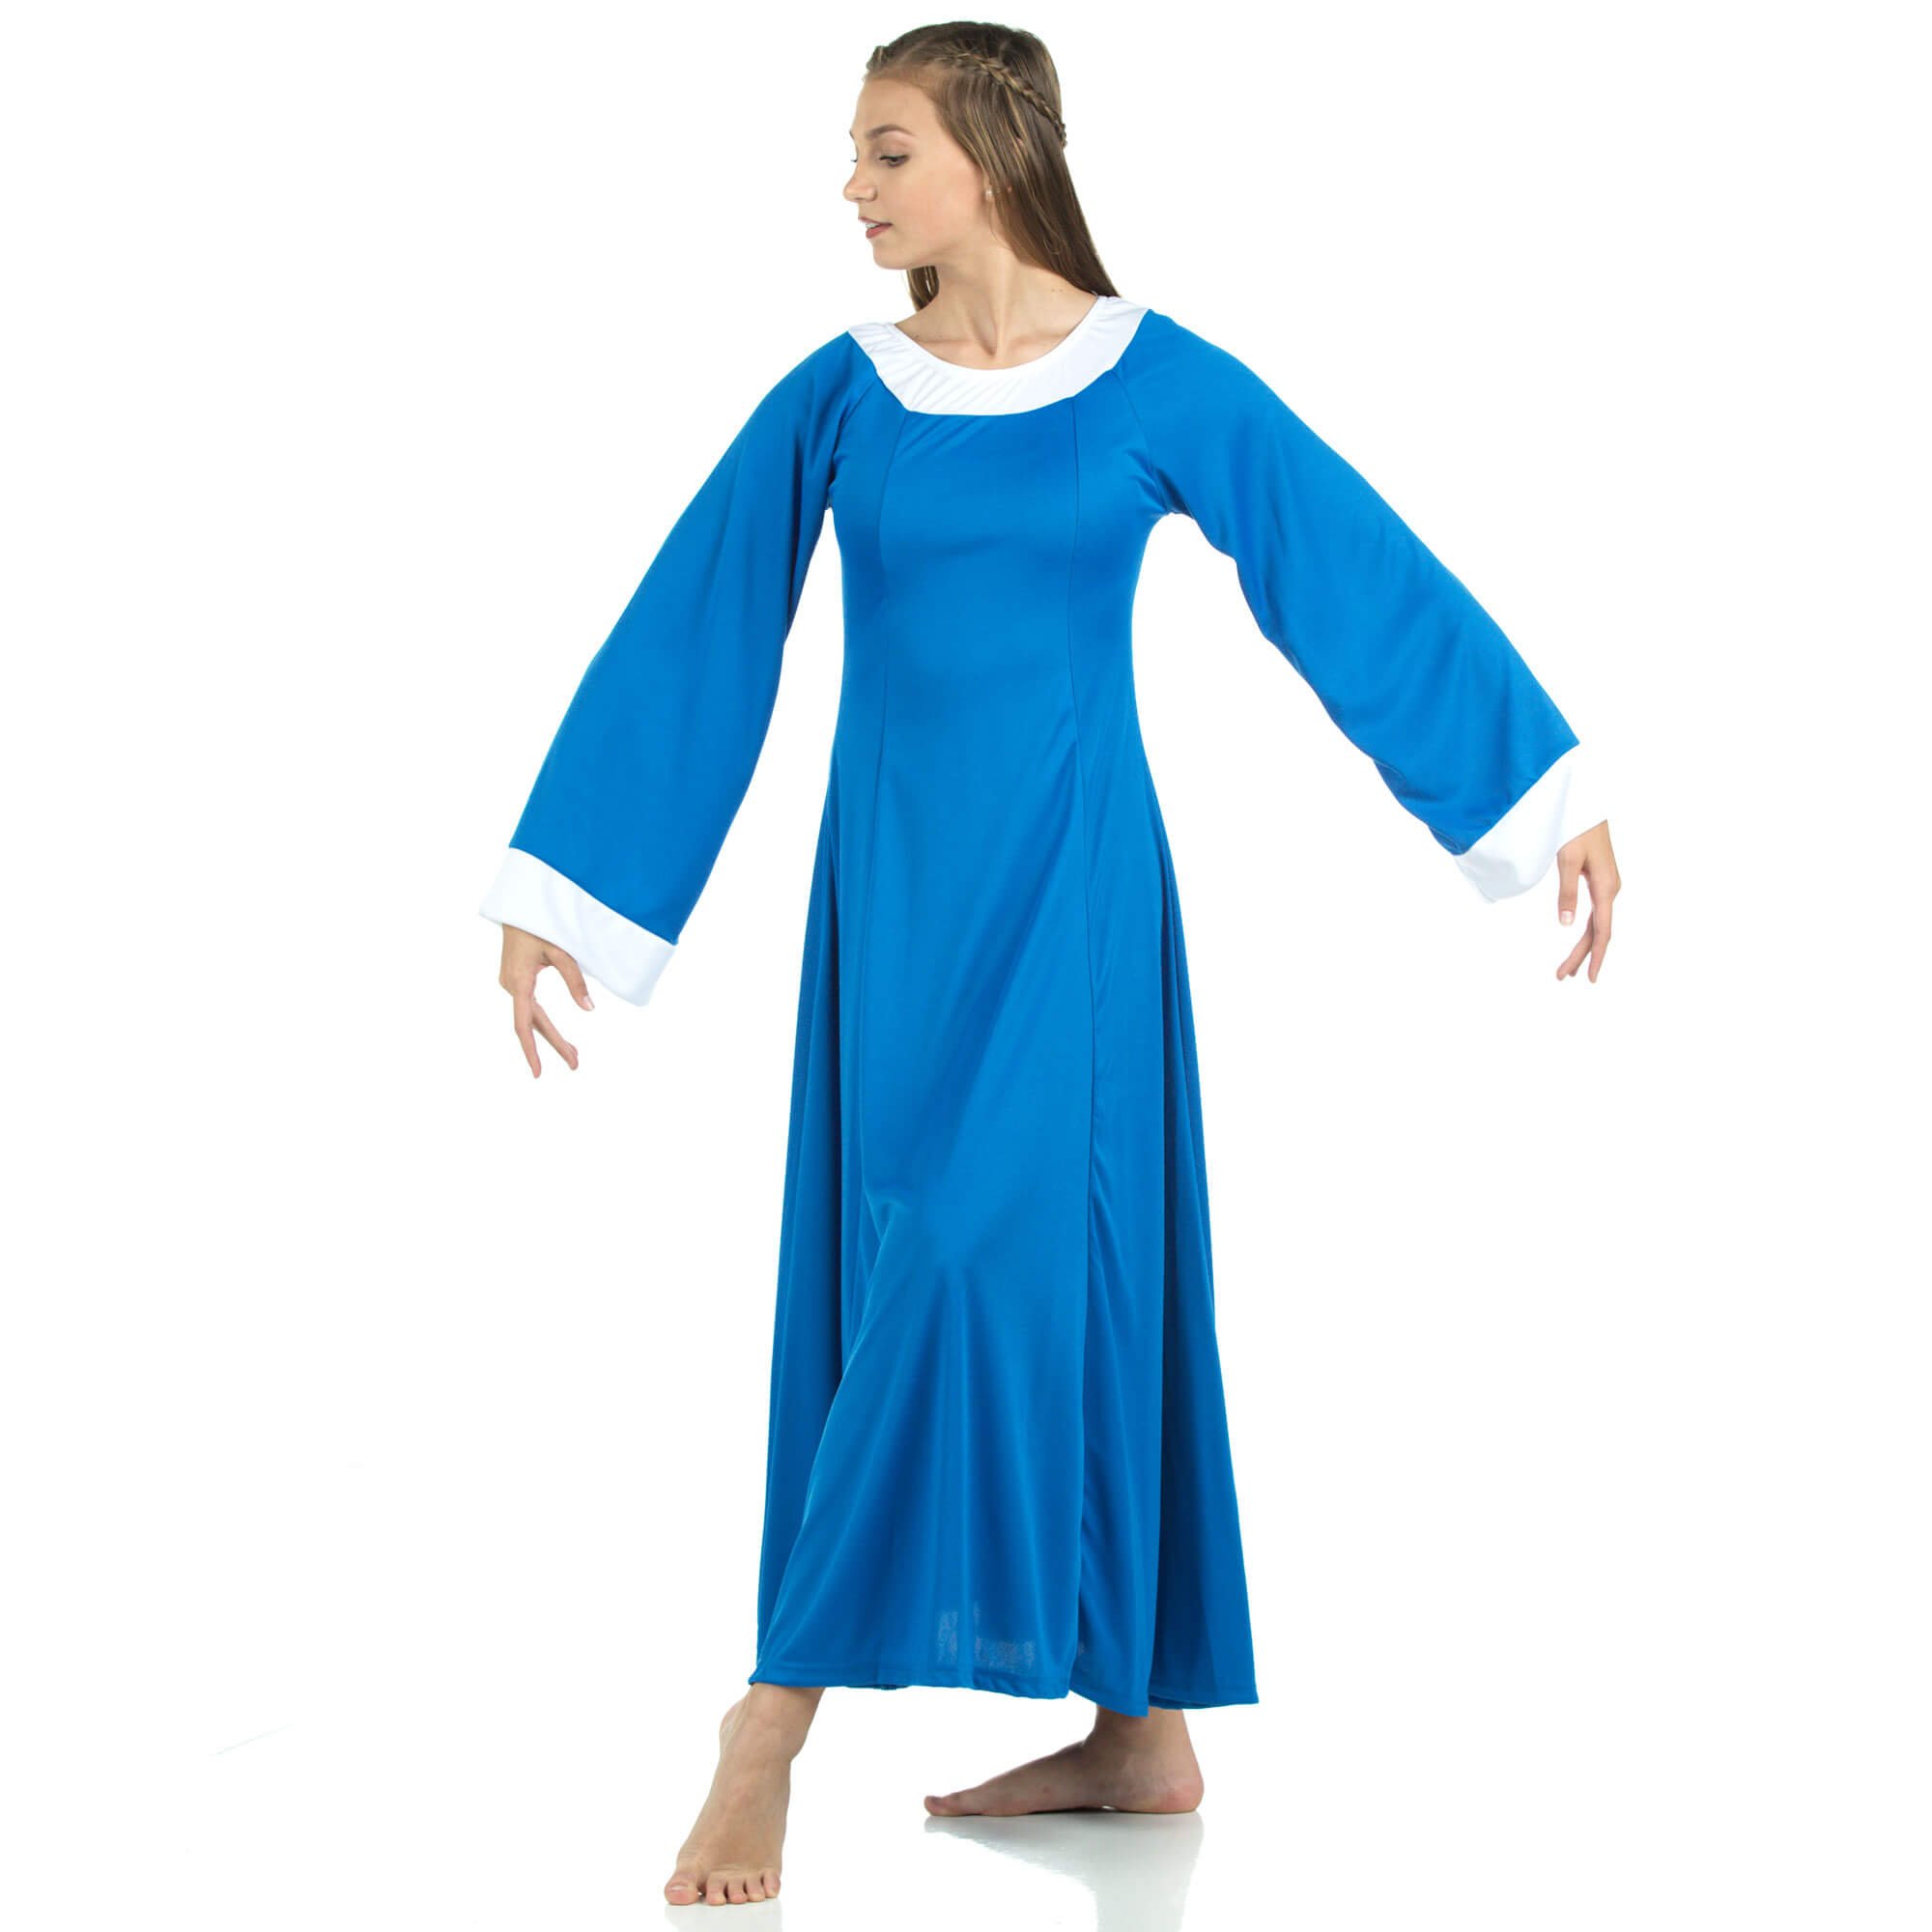 Danzcue Bell Sleeve Praise Dance Dress - Click Image to Close